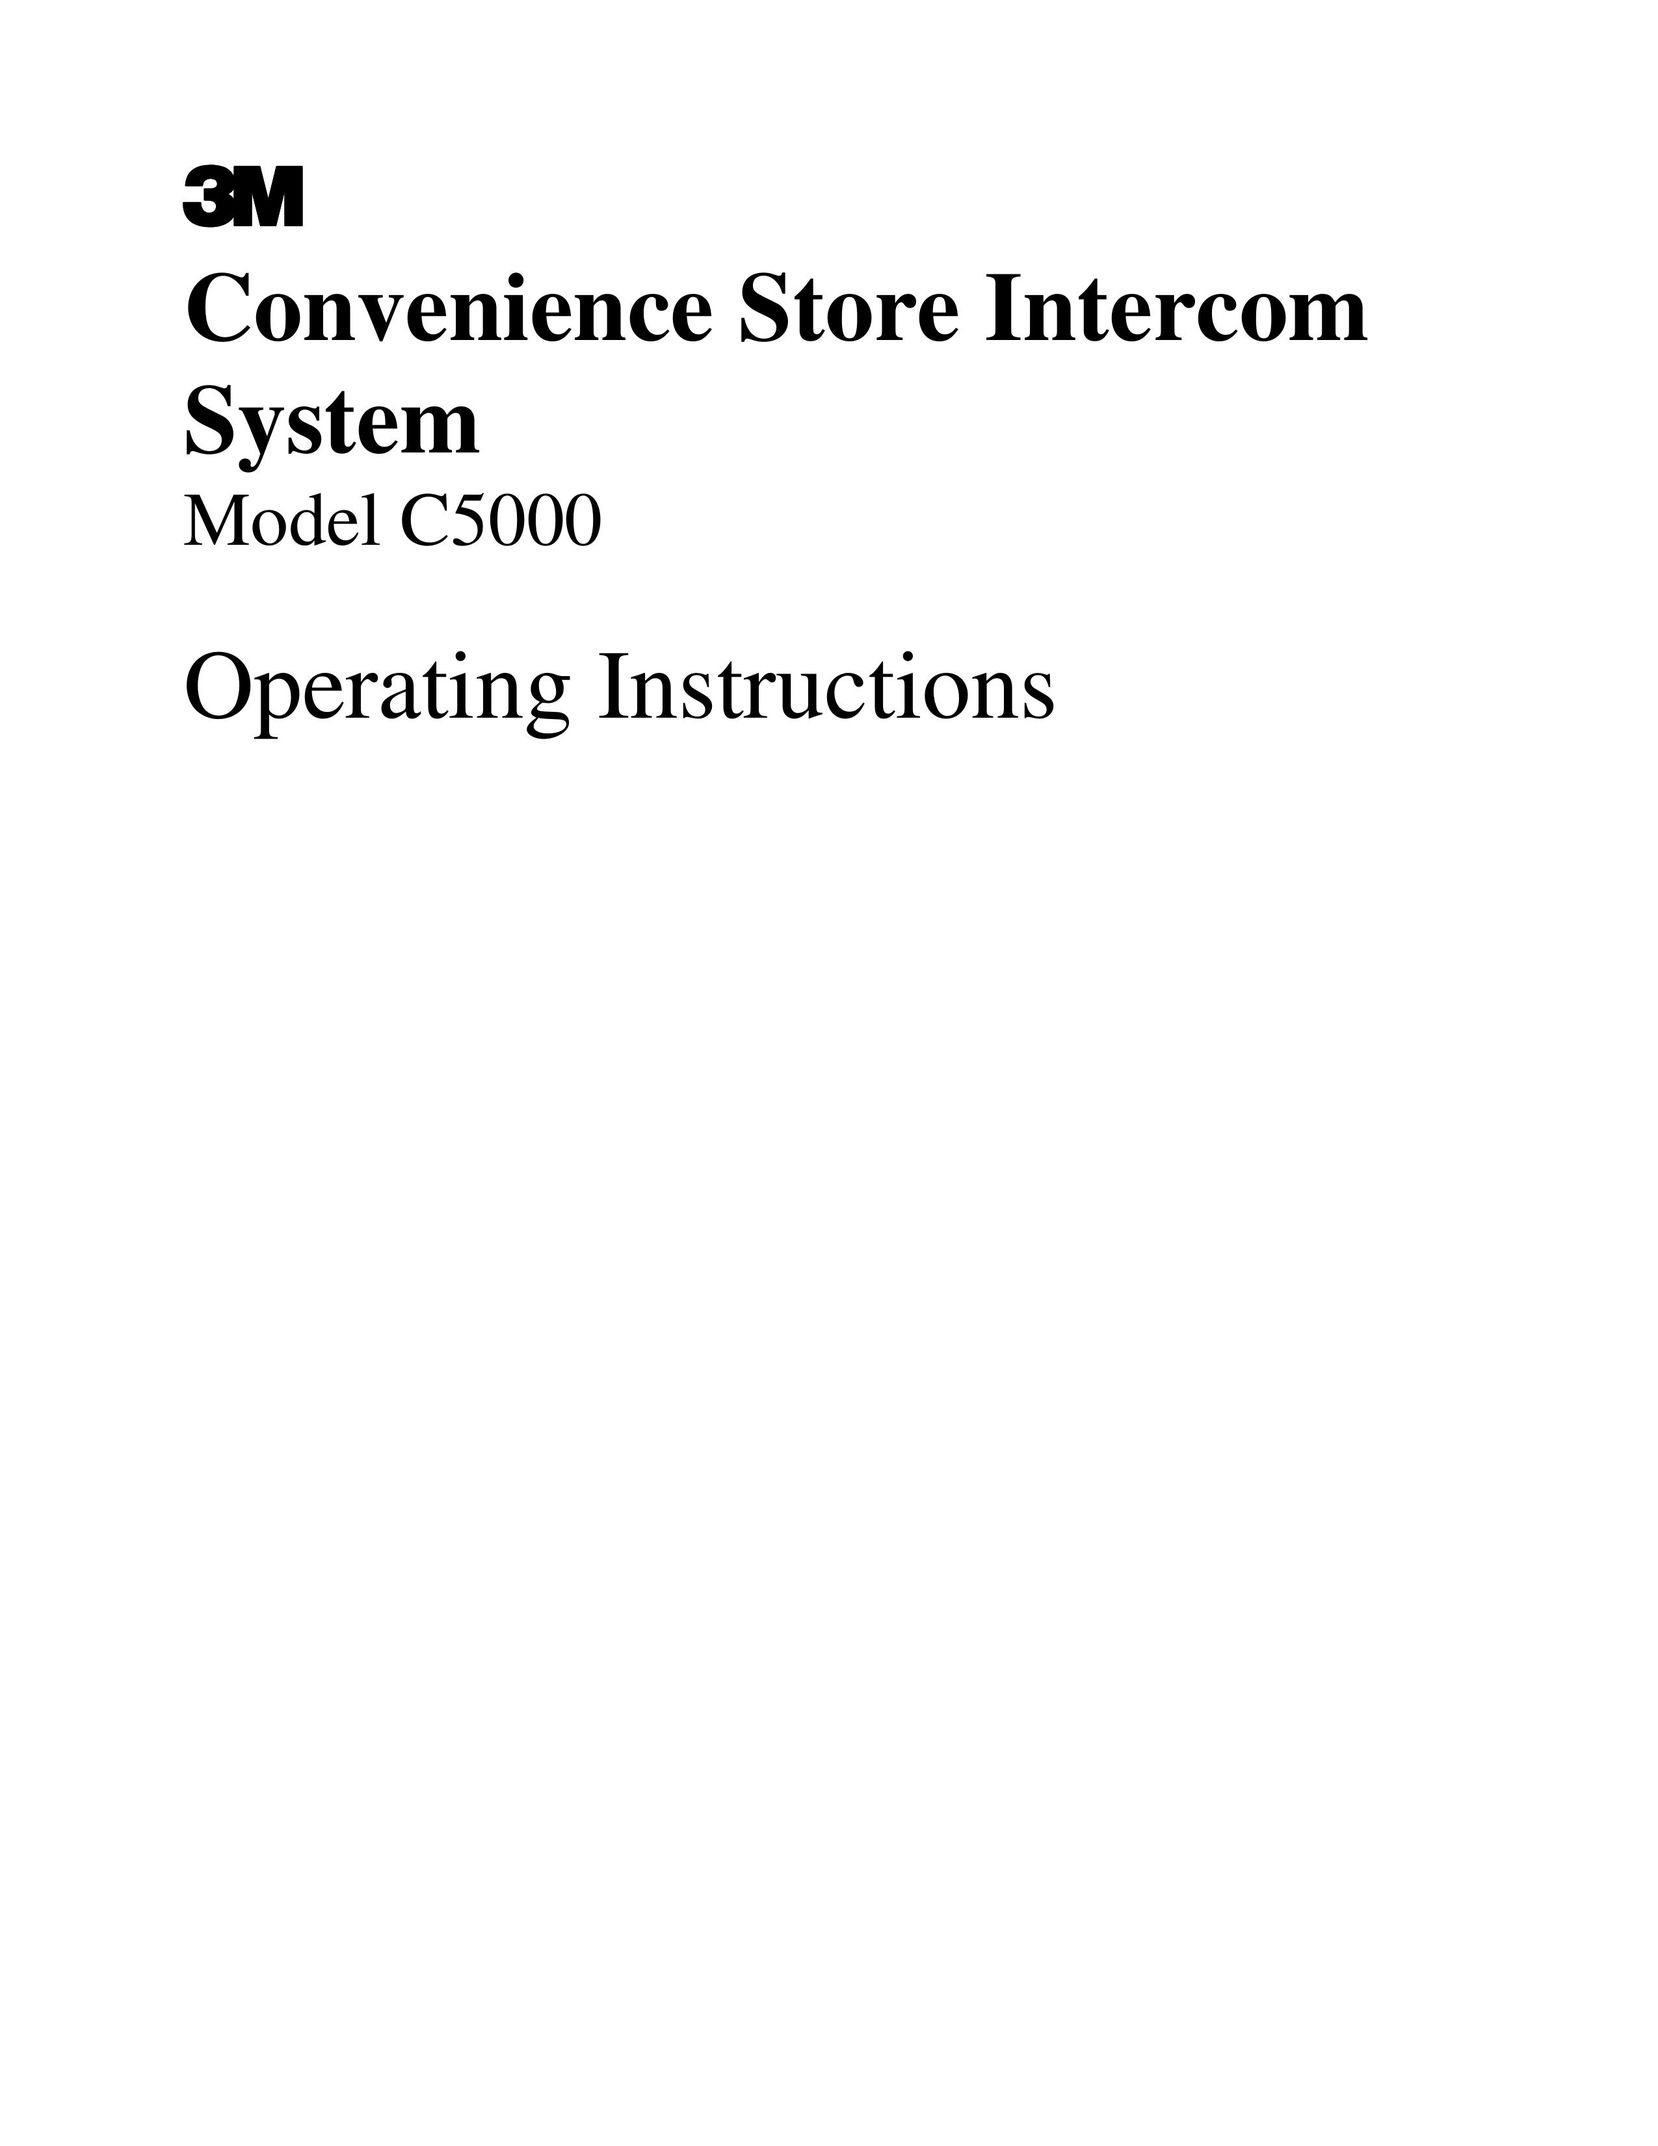 3M C5000 Intercom System User Manual